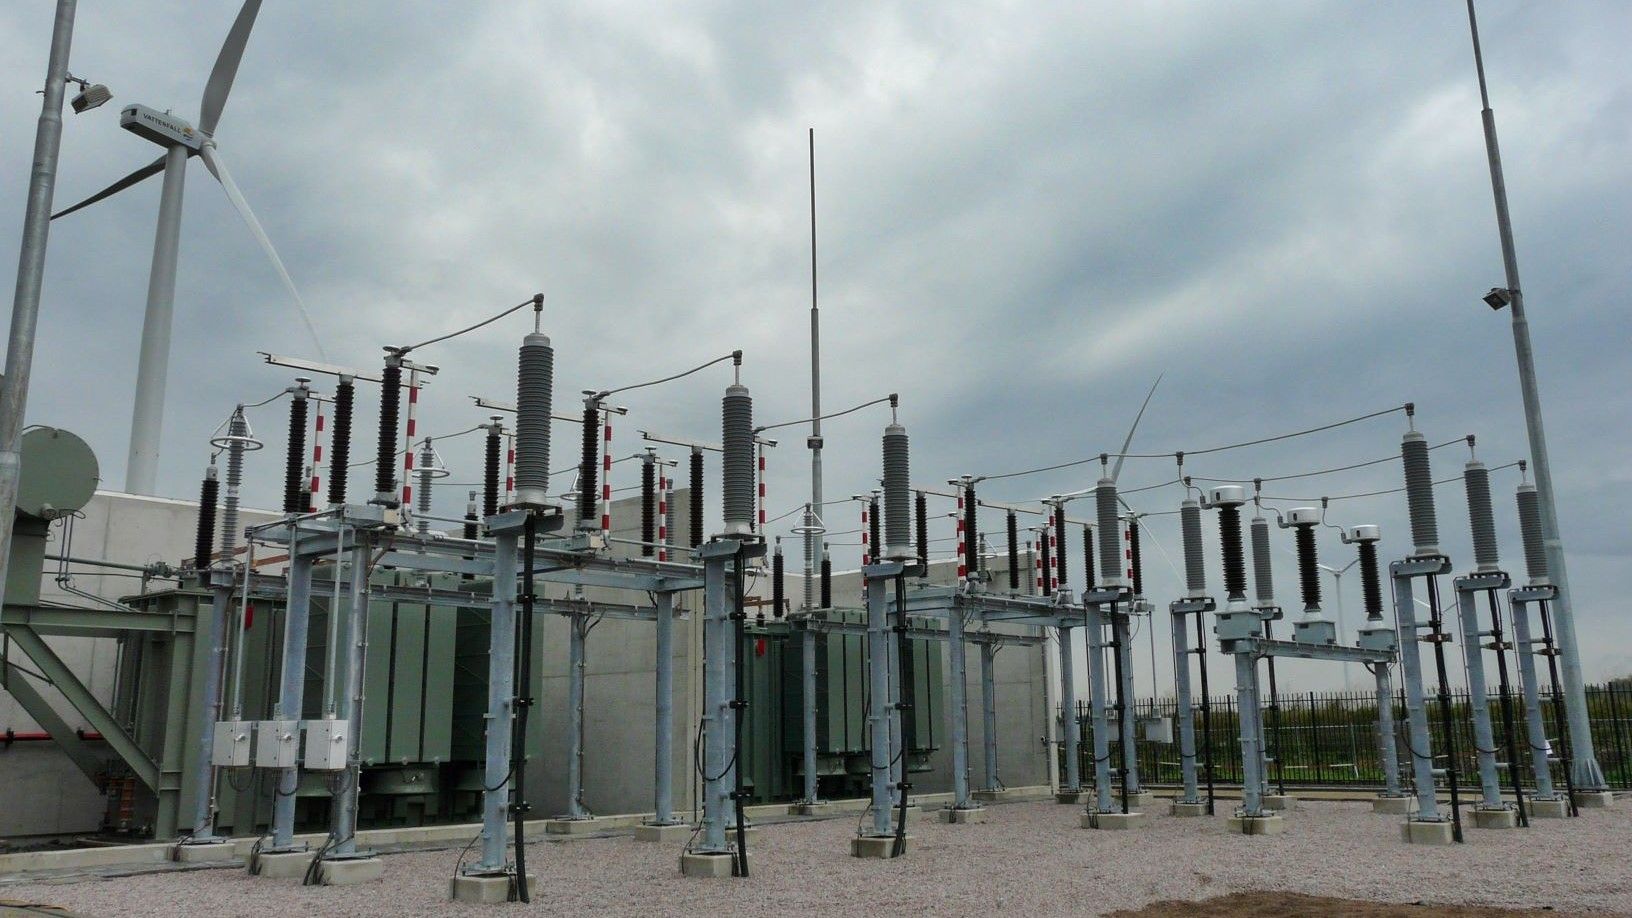 Zuidlob wind farm onshore high voltage substation